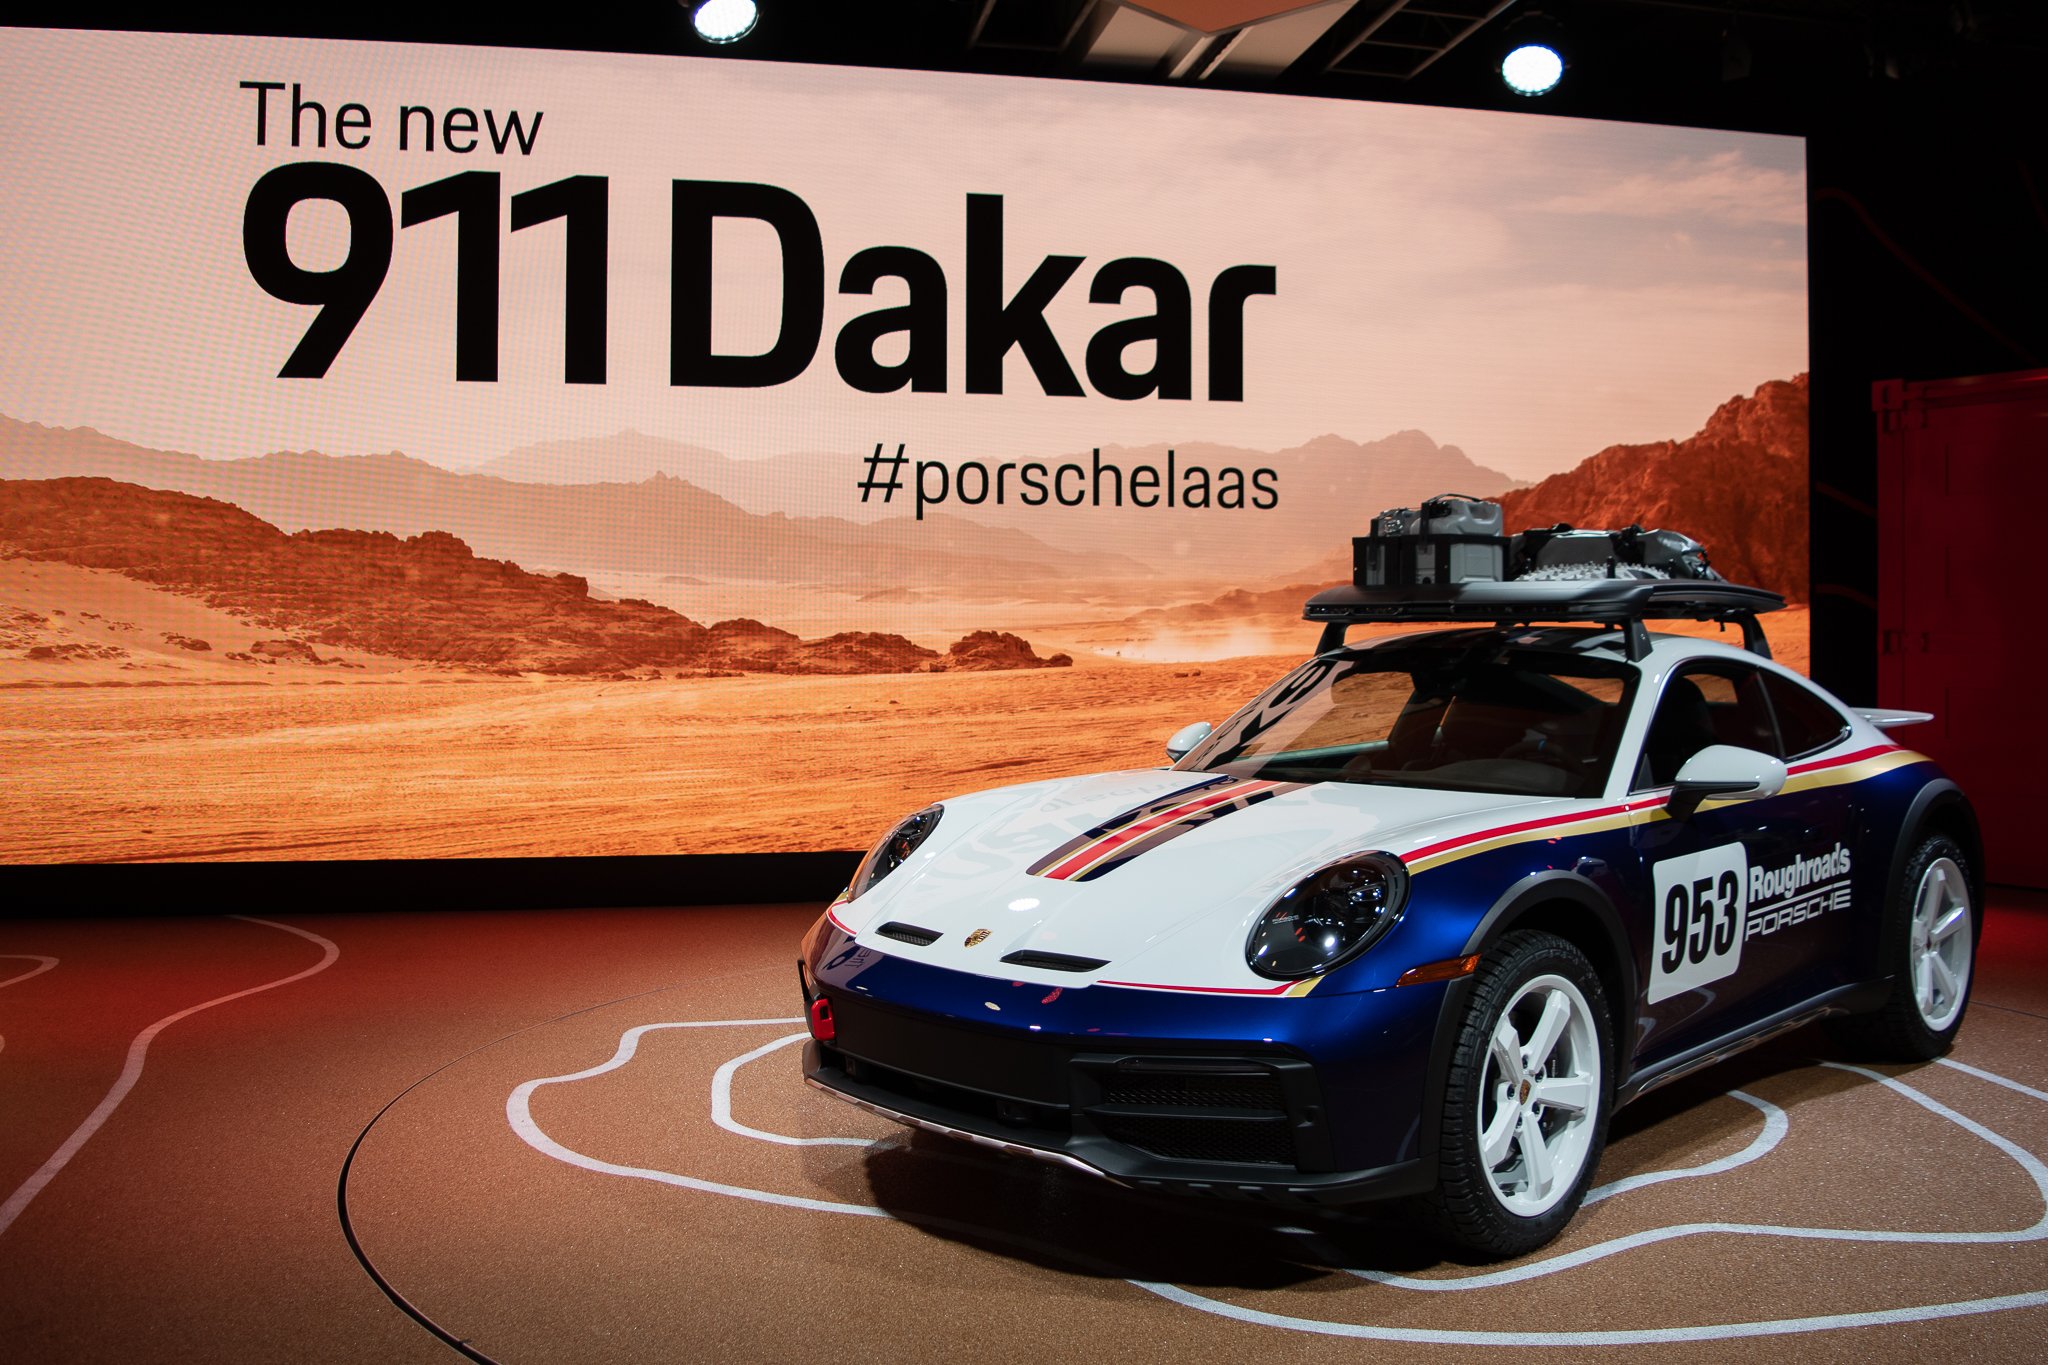 Porsche 911 Dakar Pays Homage to Legendary Rally Heritage